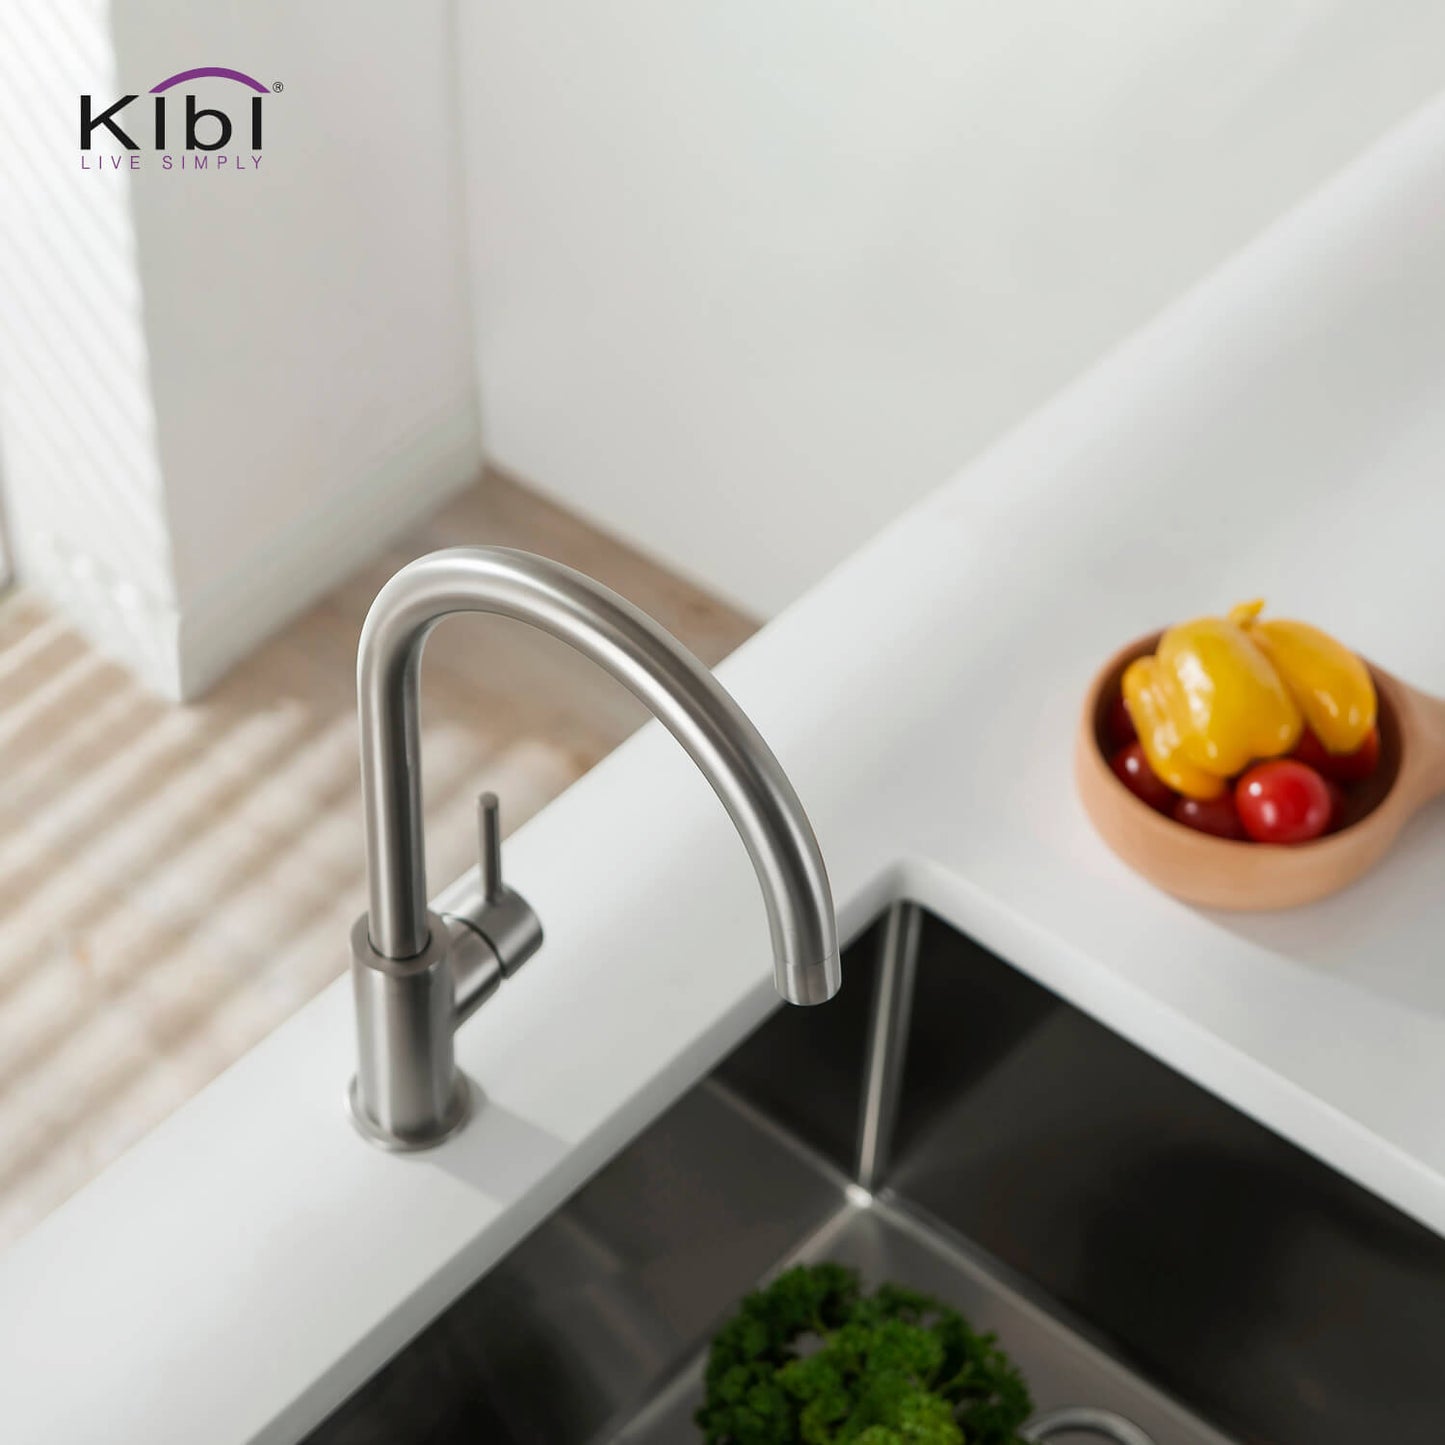 Kibi Lowa Single Handle High Arc Kitchen Bar Sink Faucet in Brushed Nickel Finish